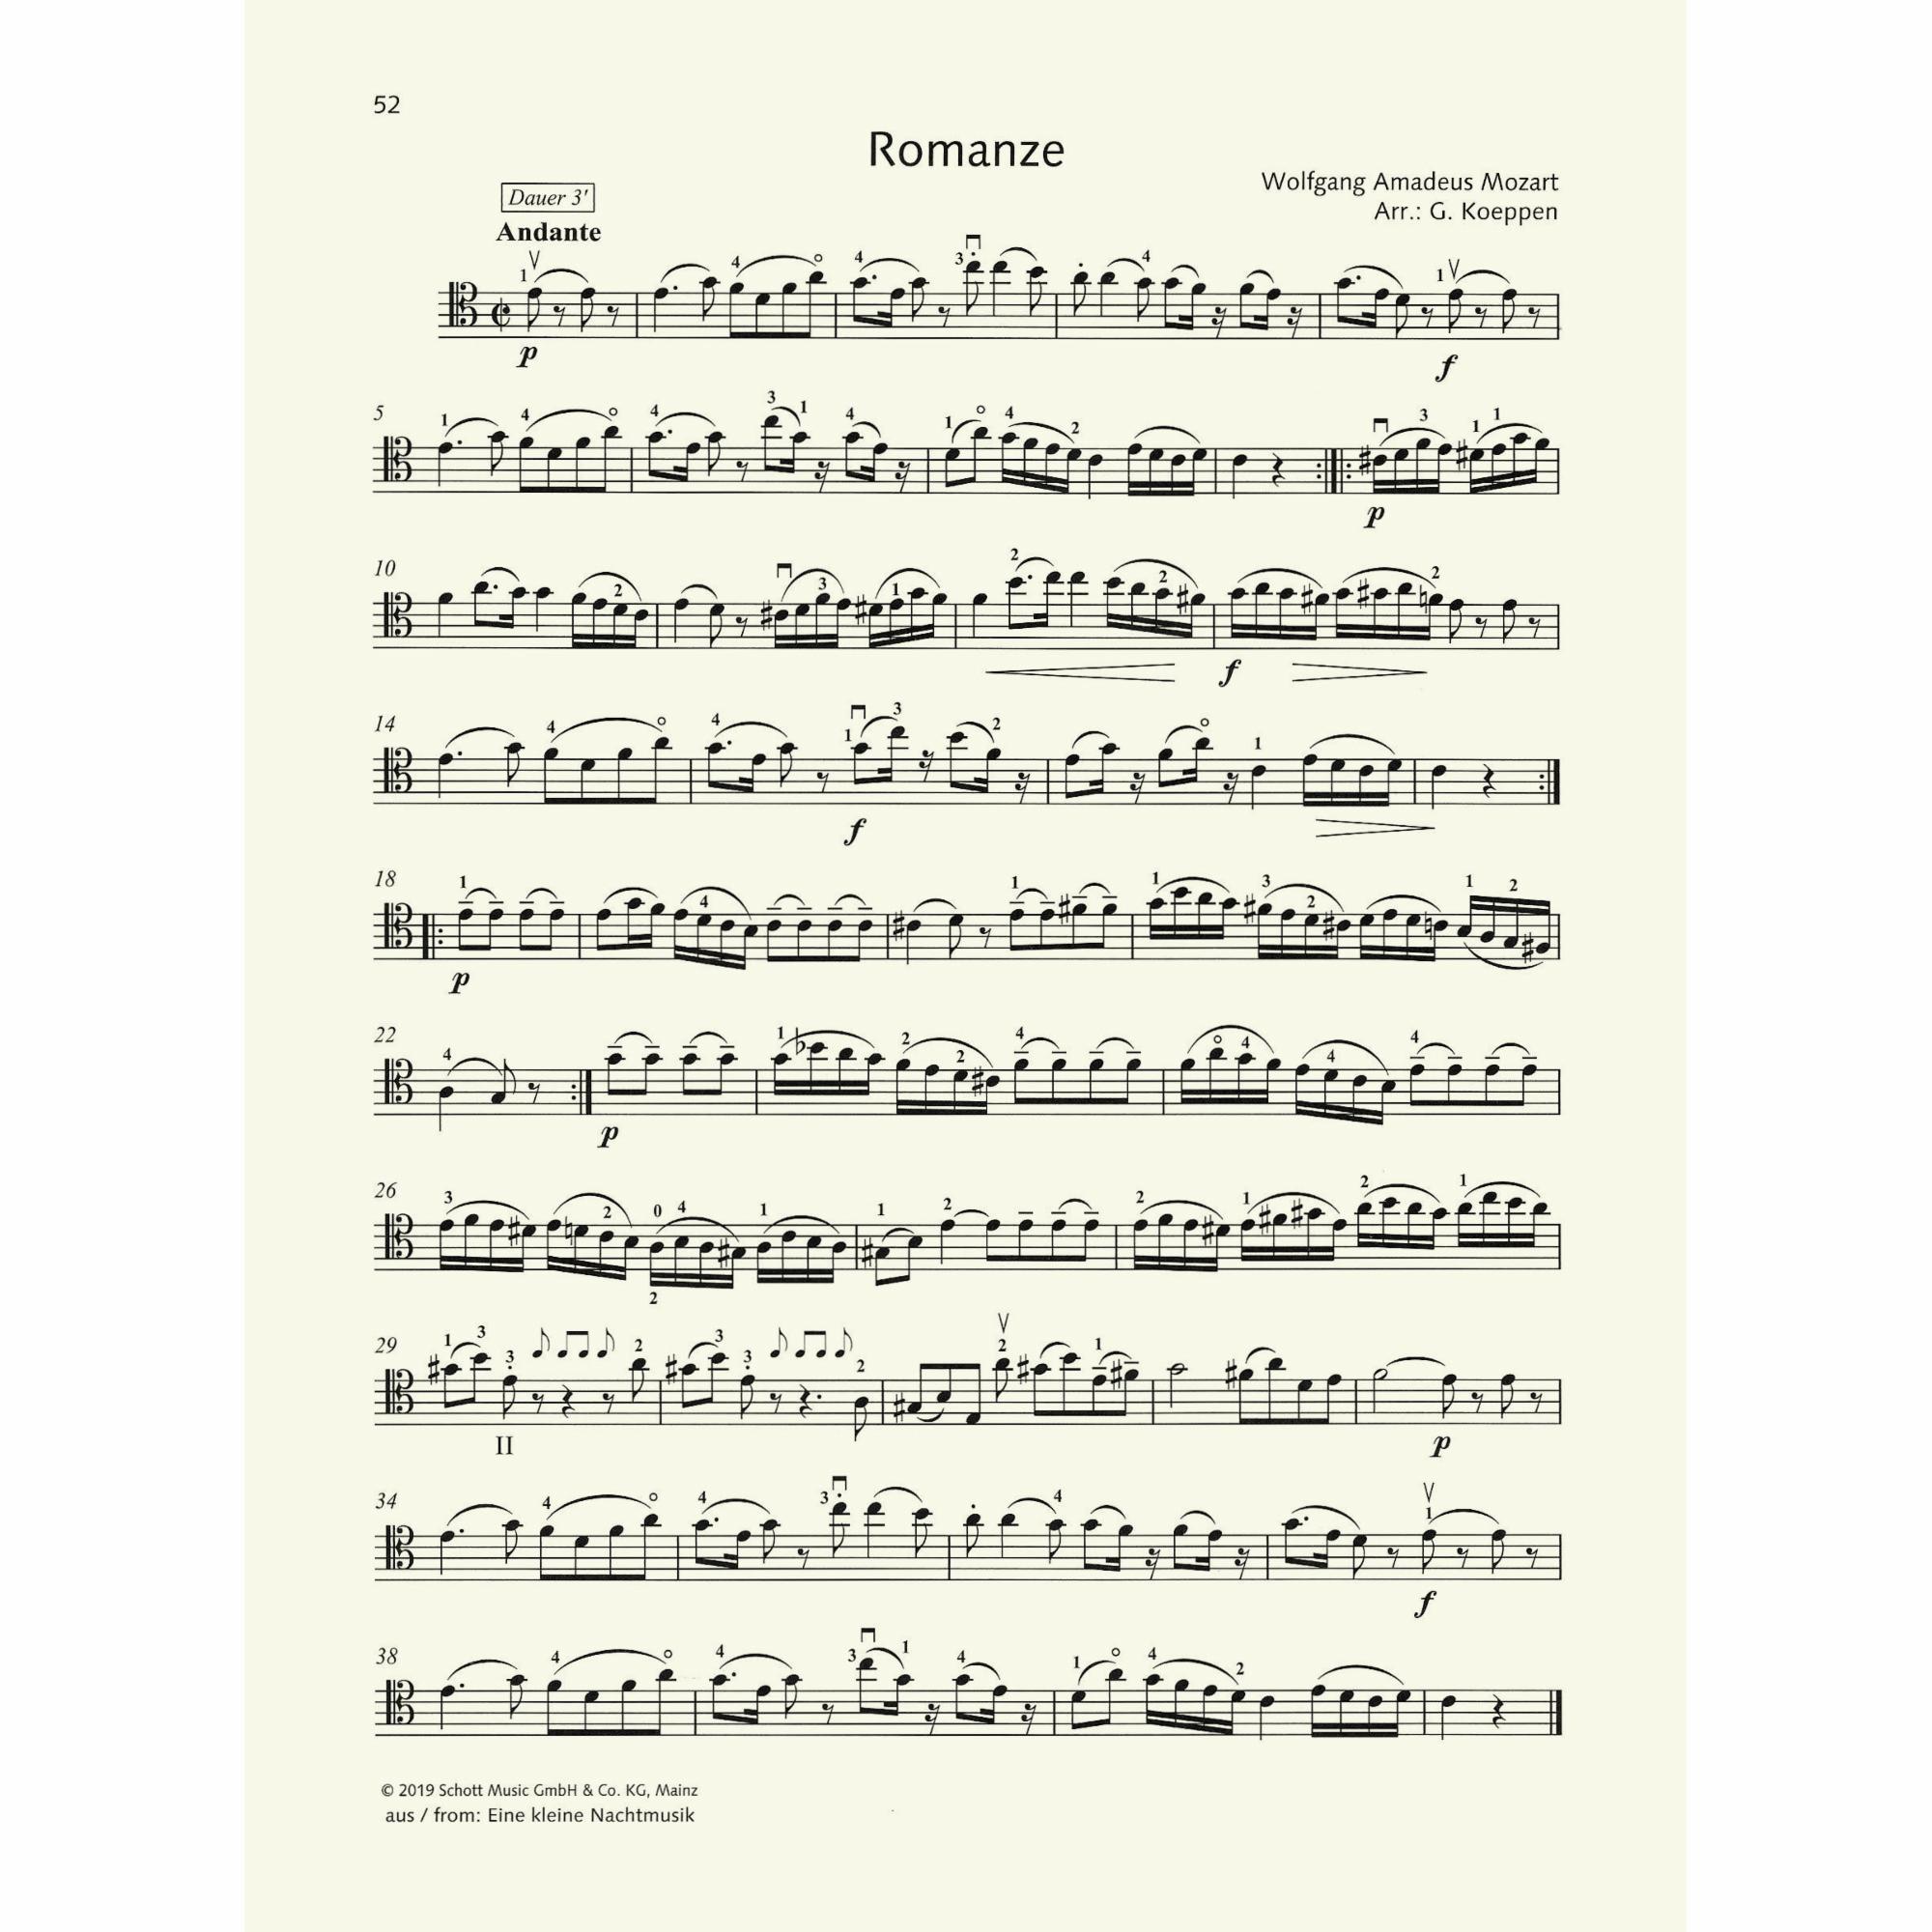 Sample: Cello I (Pg. 52)